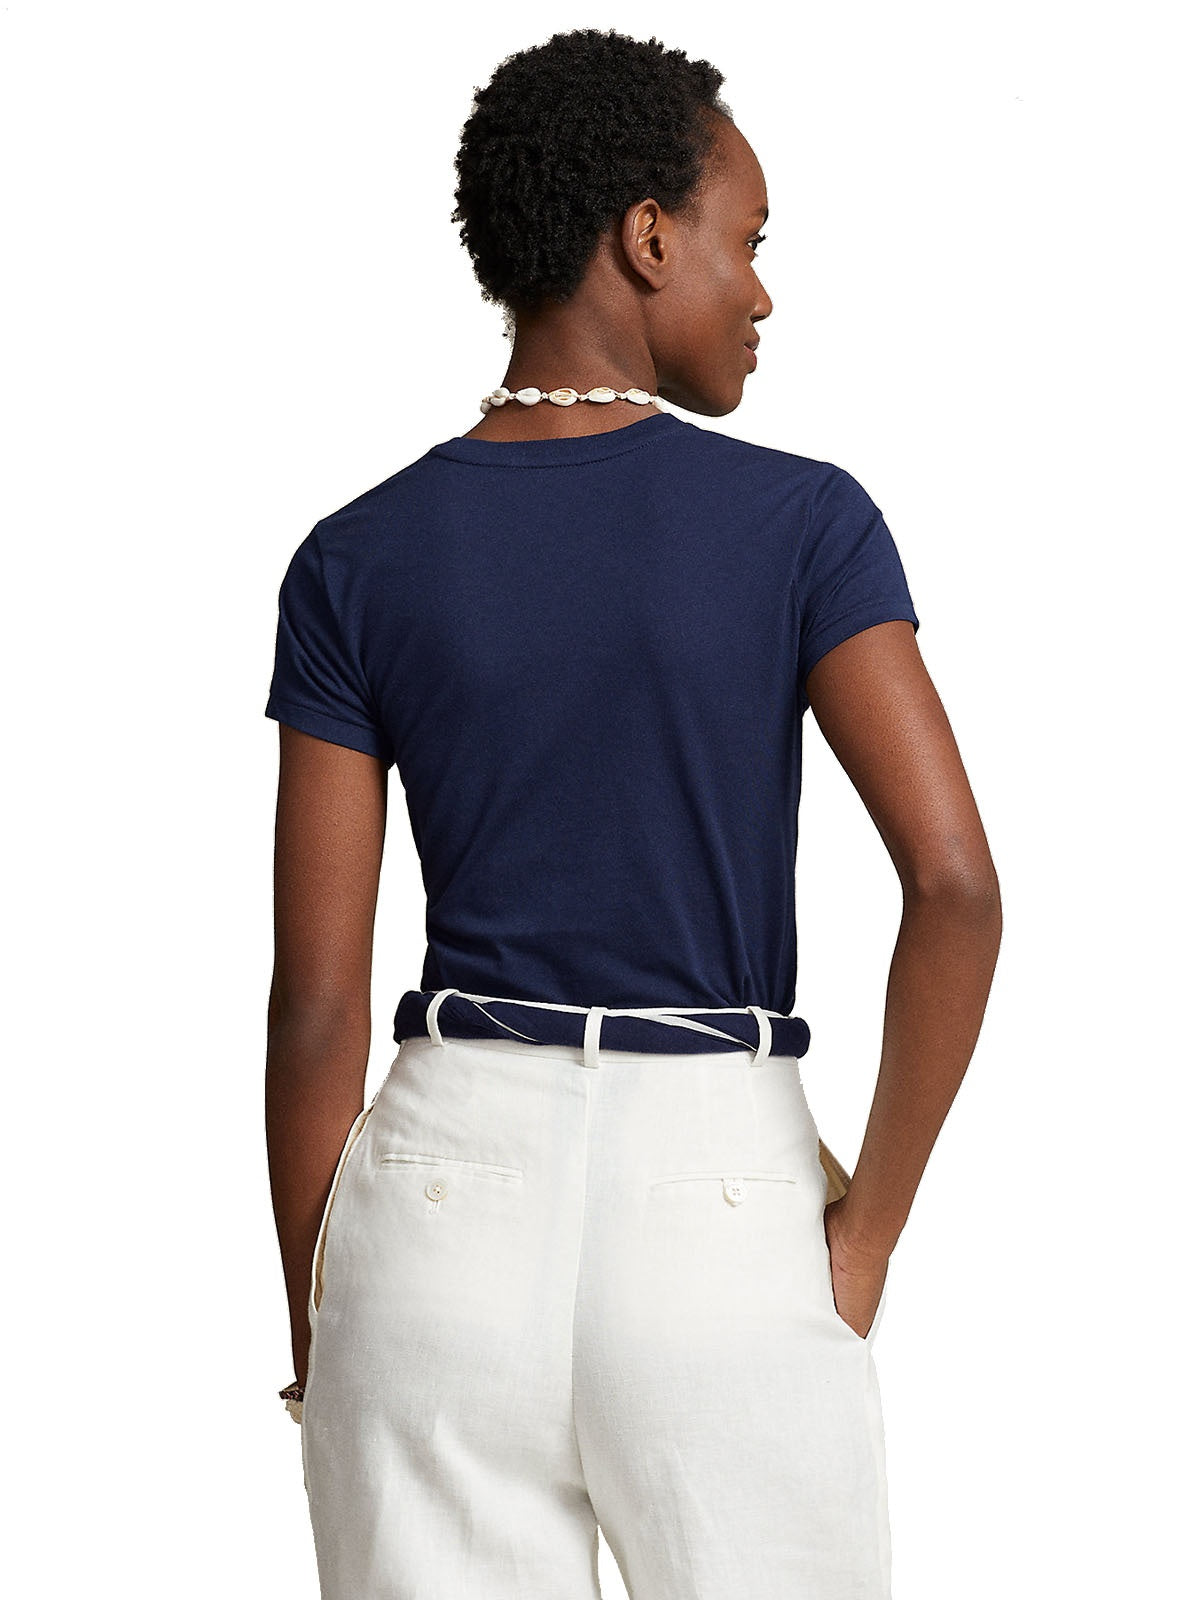 T-shirt Donna Ralph Lauren - Maglietta Girocollo In Jersey Di Cotone - Blu